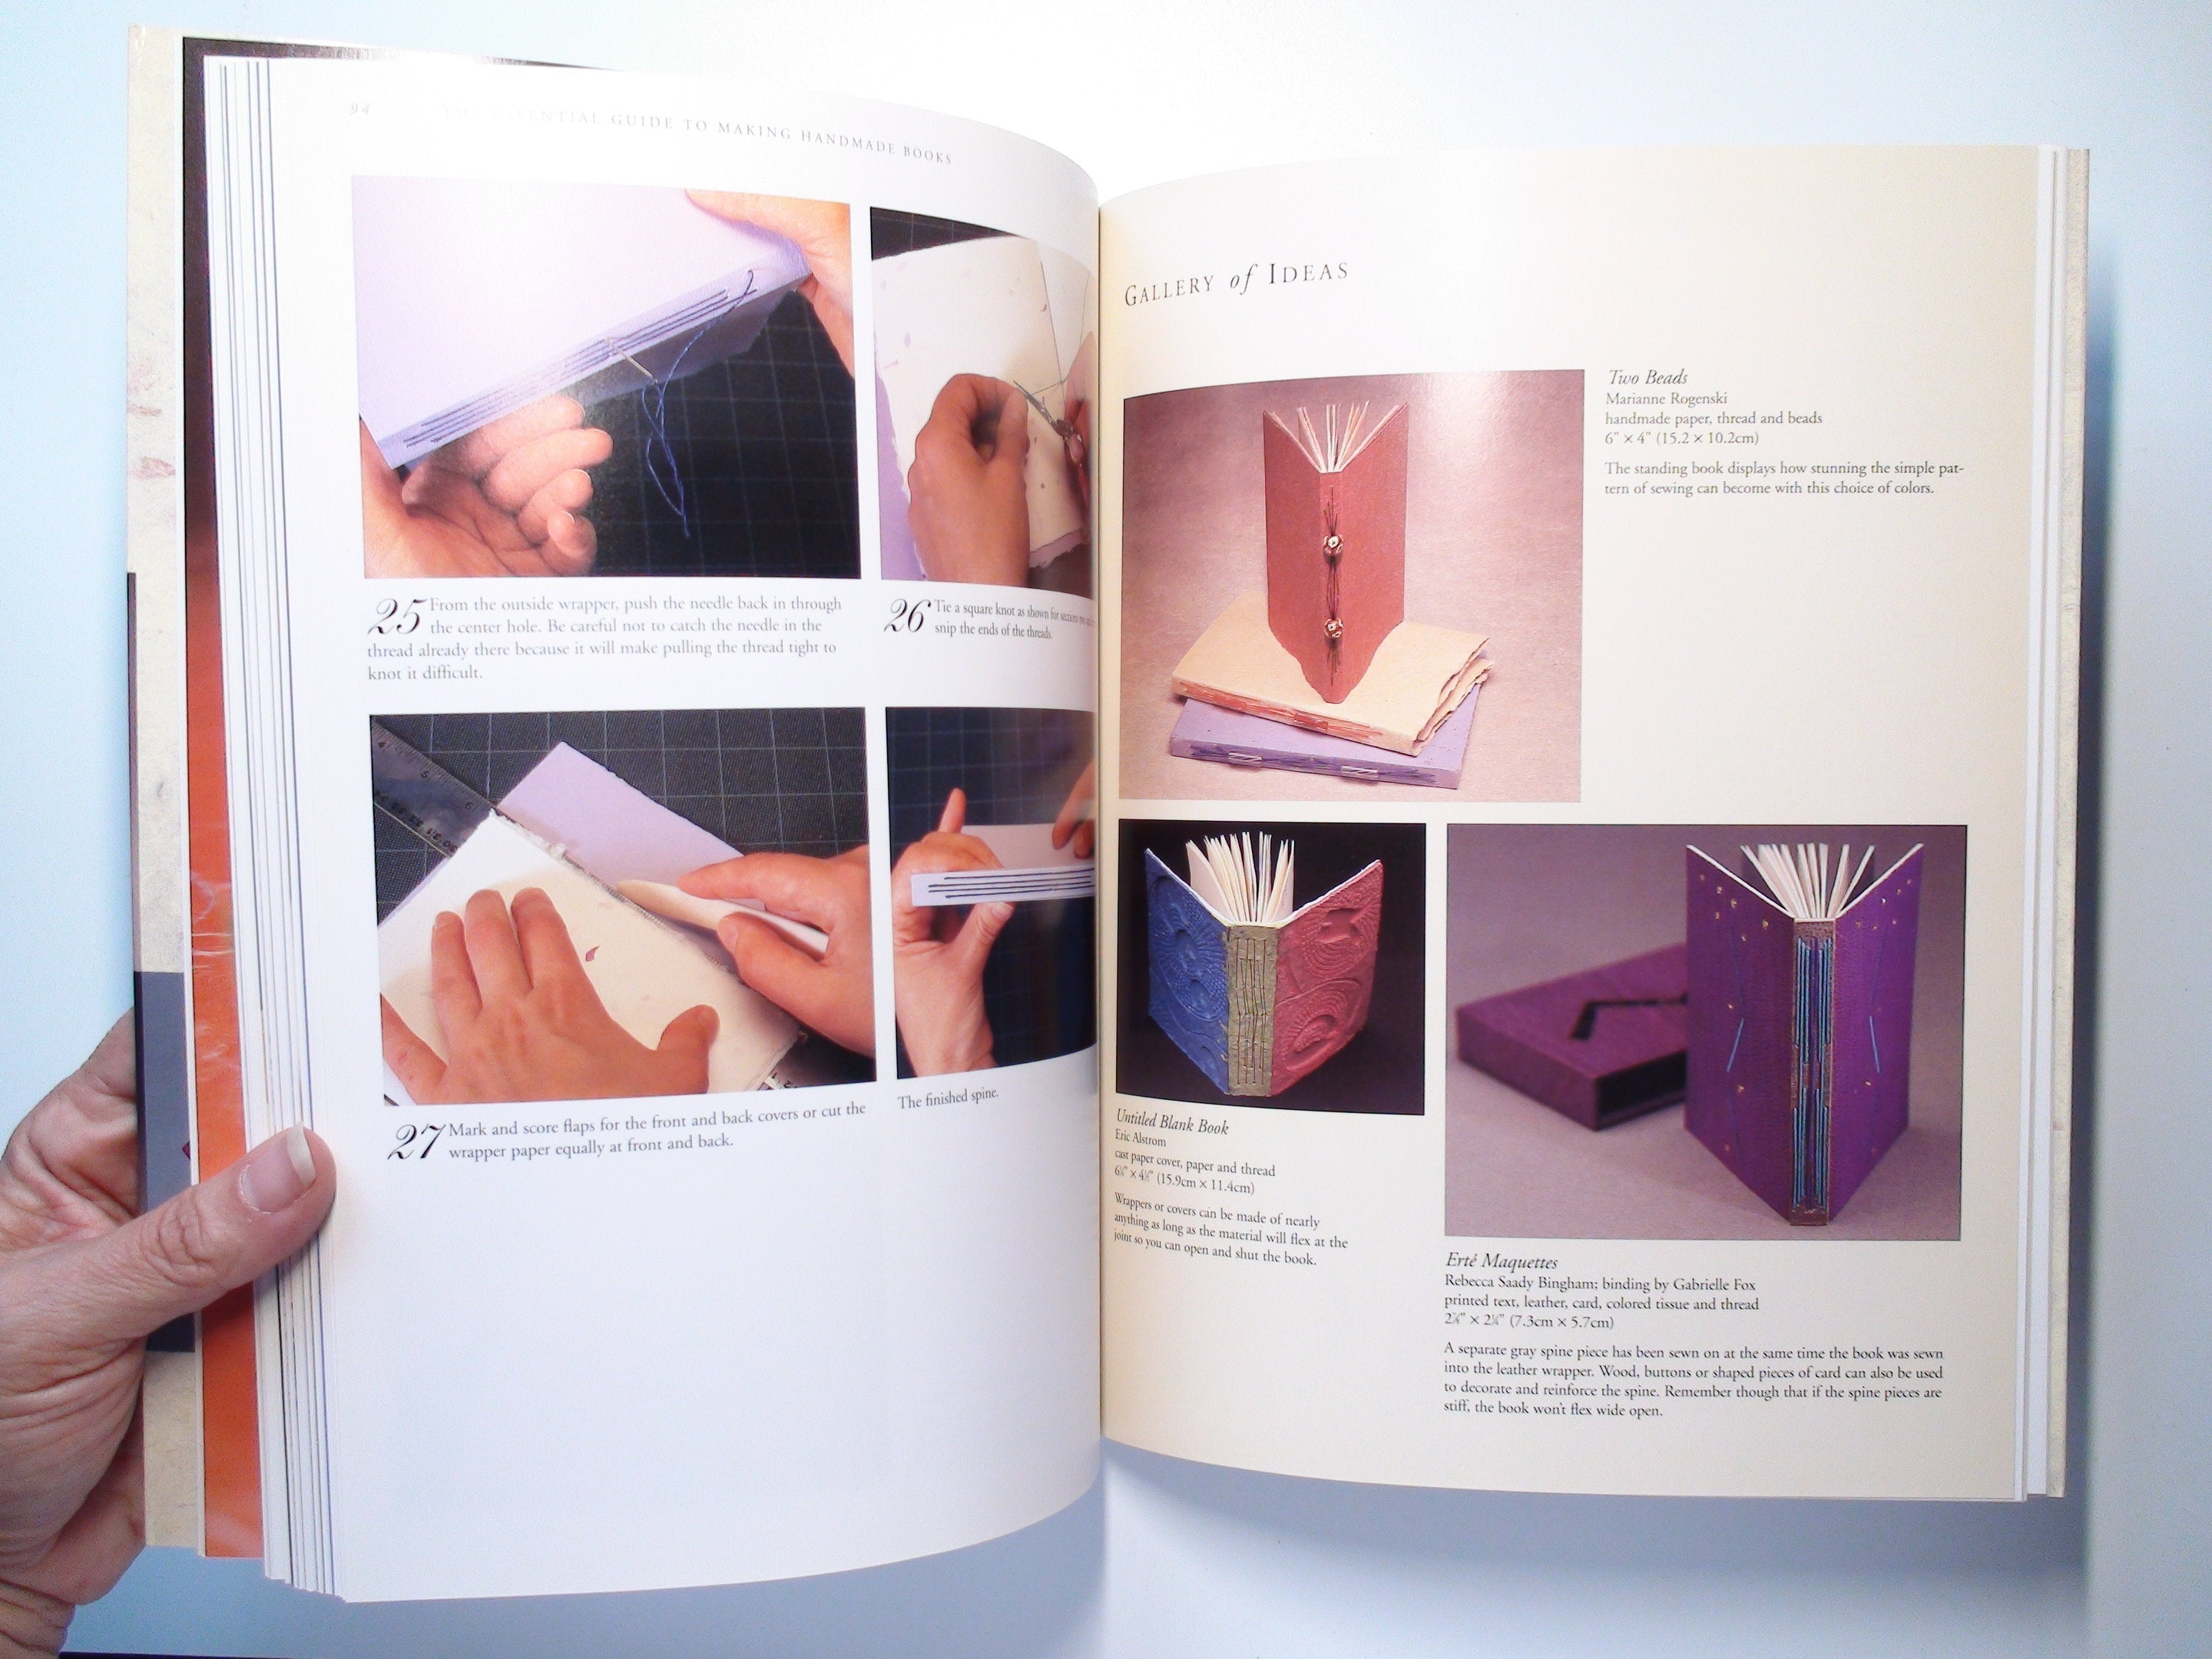 The Essential Guide to Making Handmade Books, Gabrielle Fox, 2000